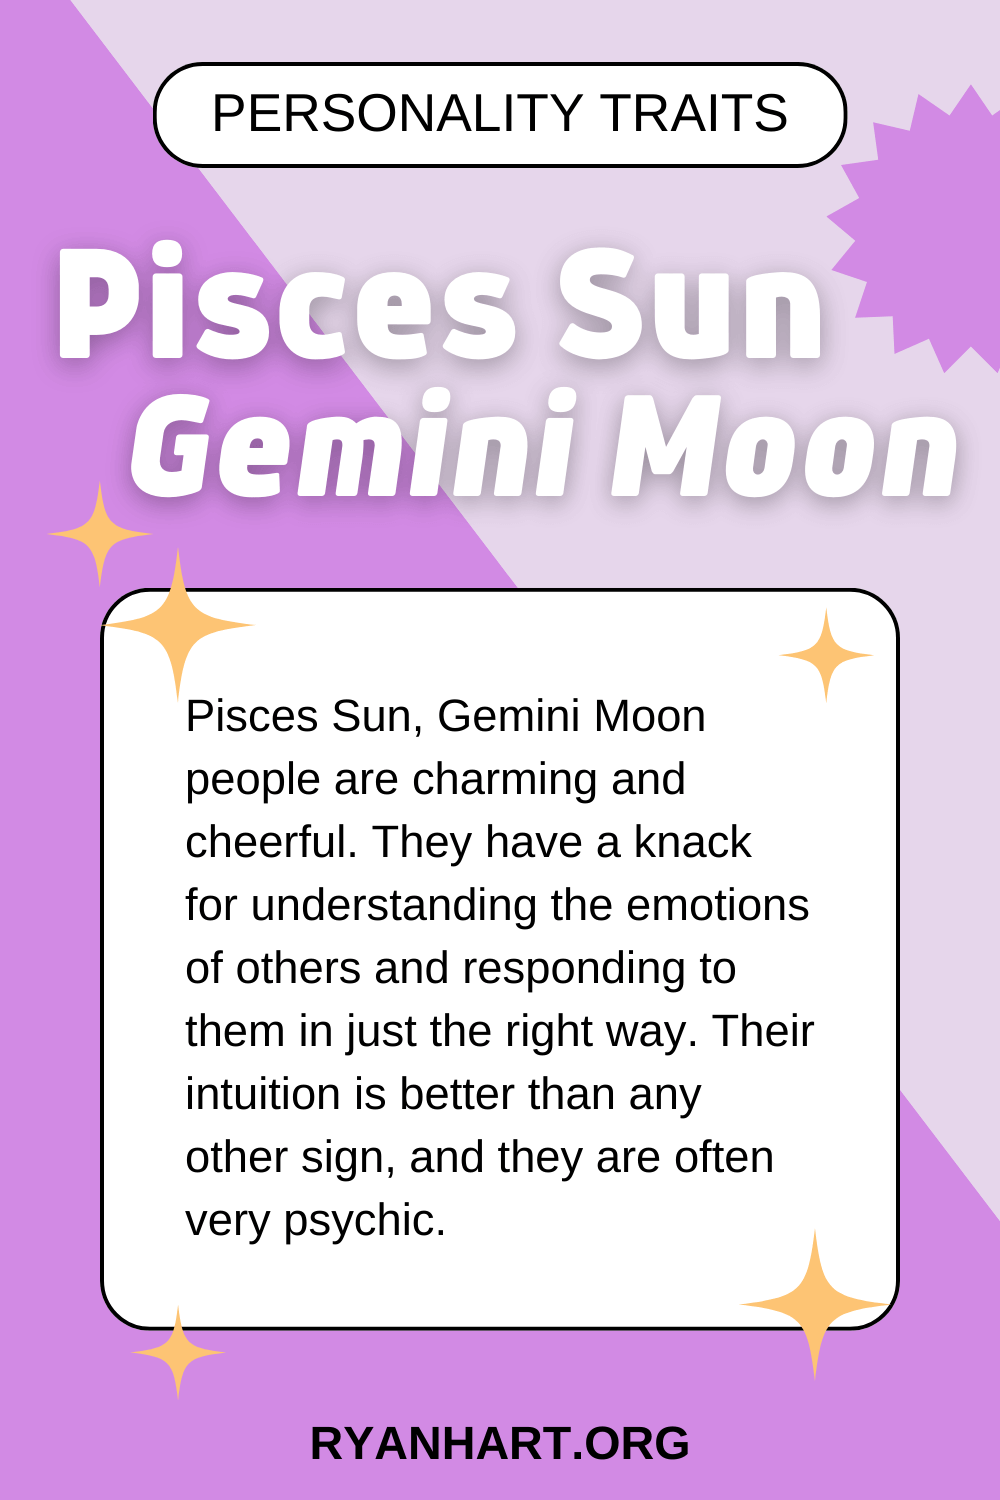 Pisces Sun Gemini Moon Description